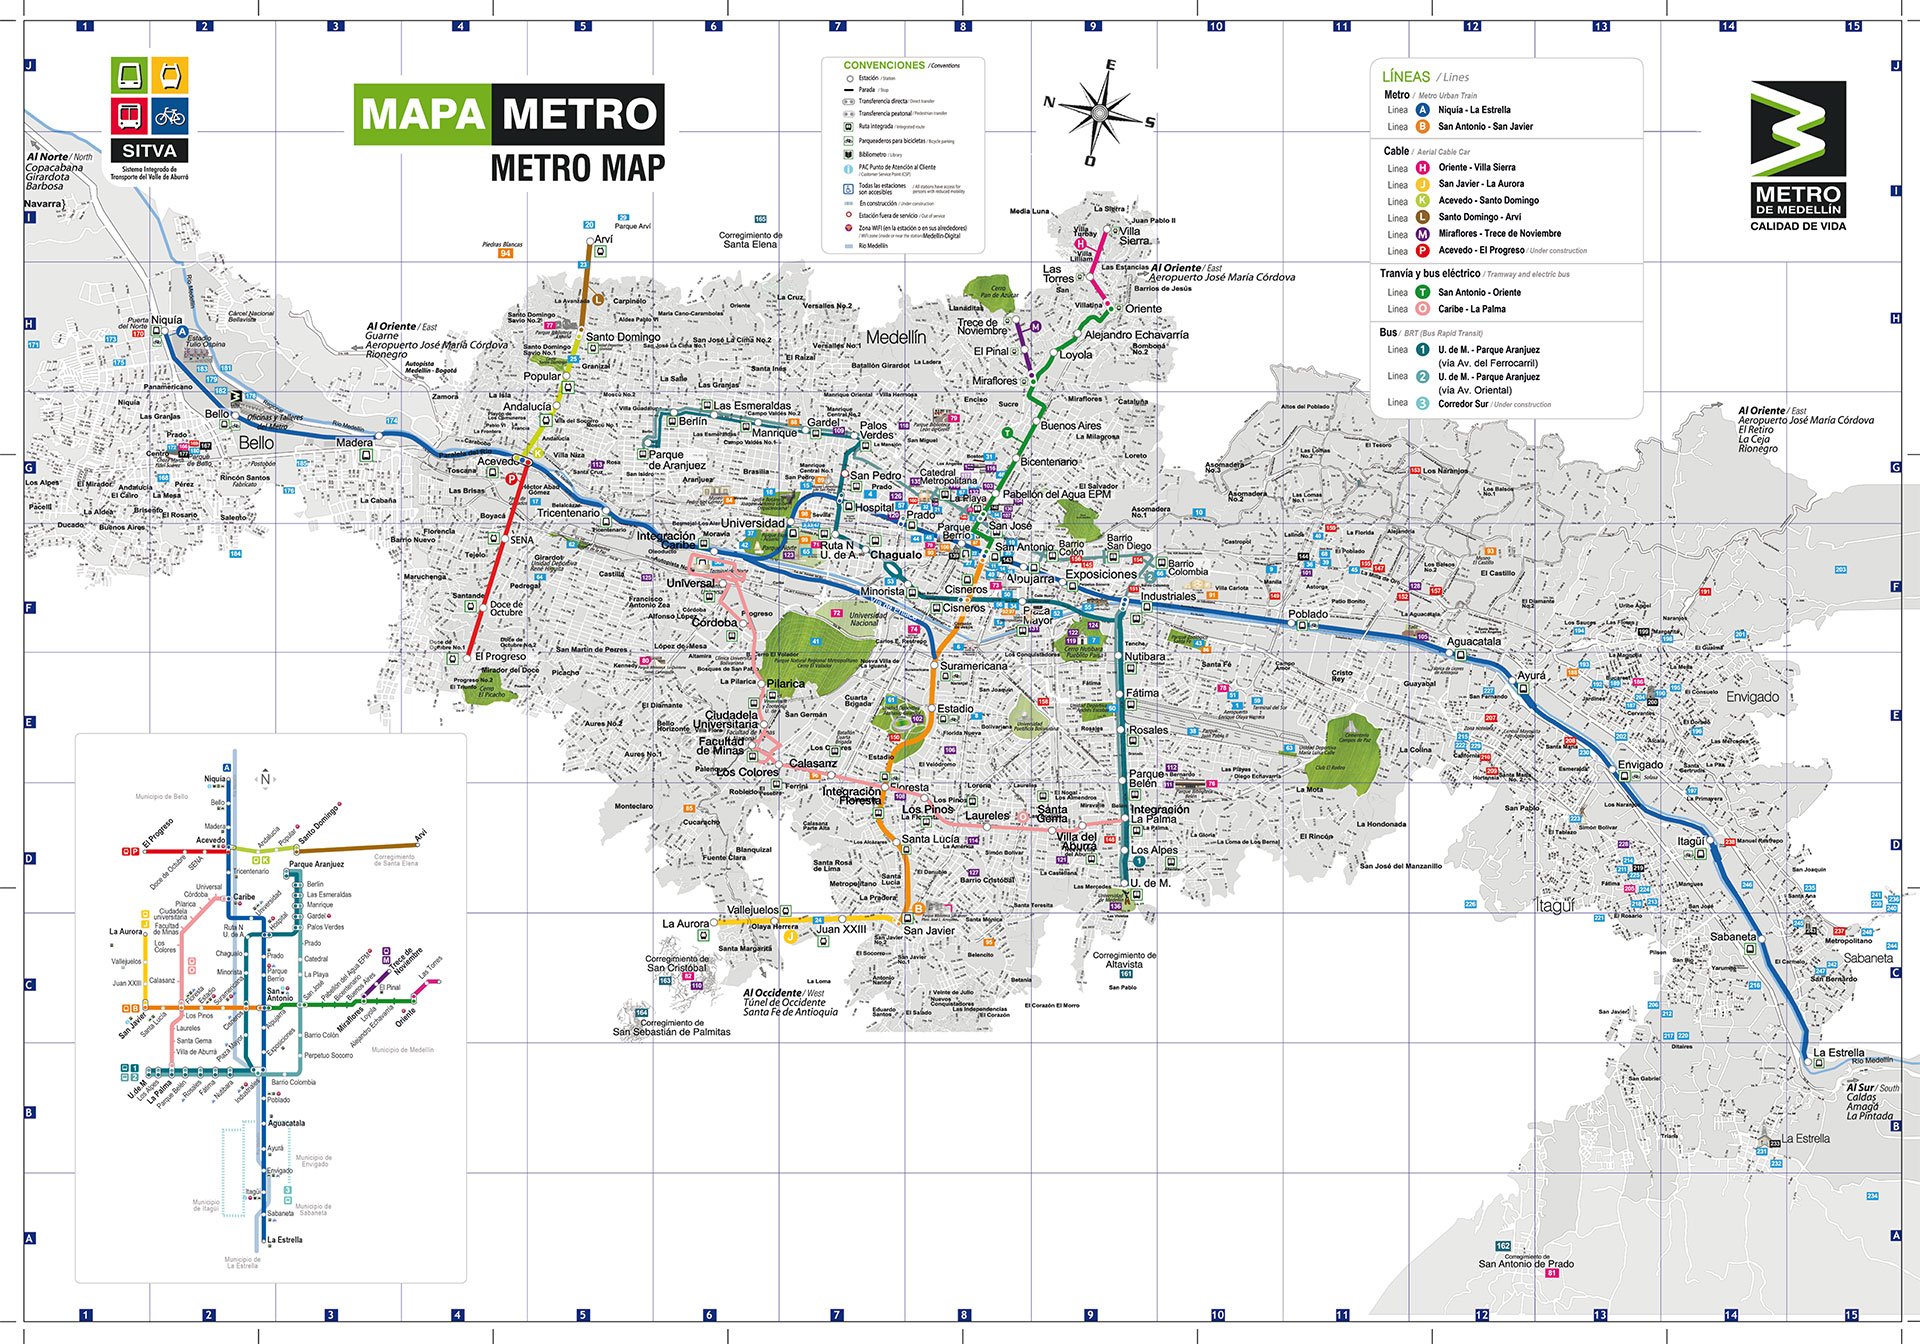 Maps of the Medellin Metro
